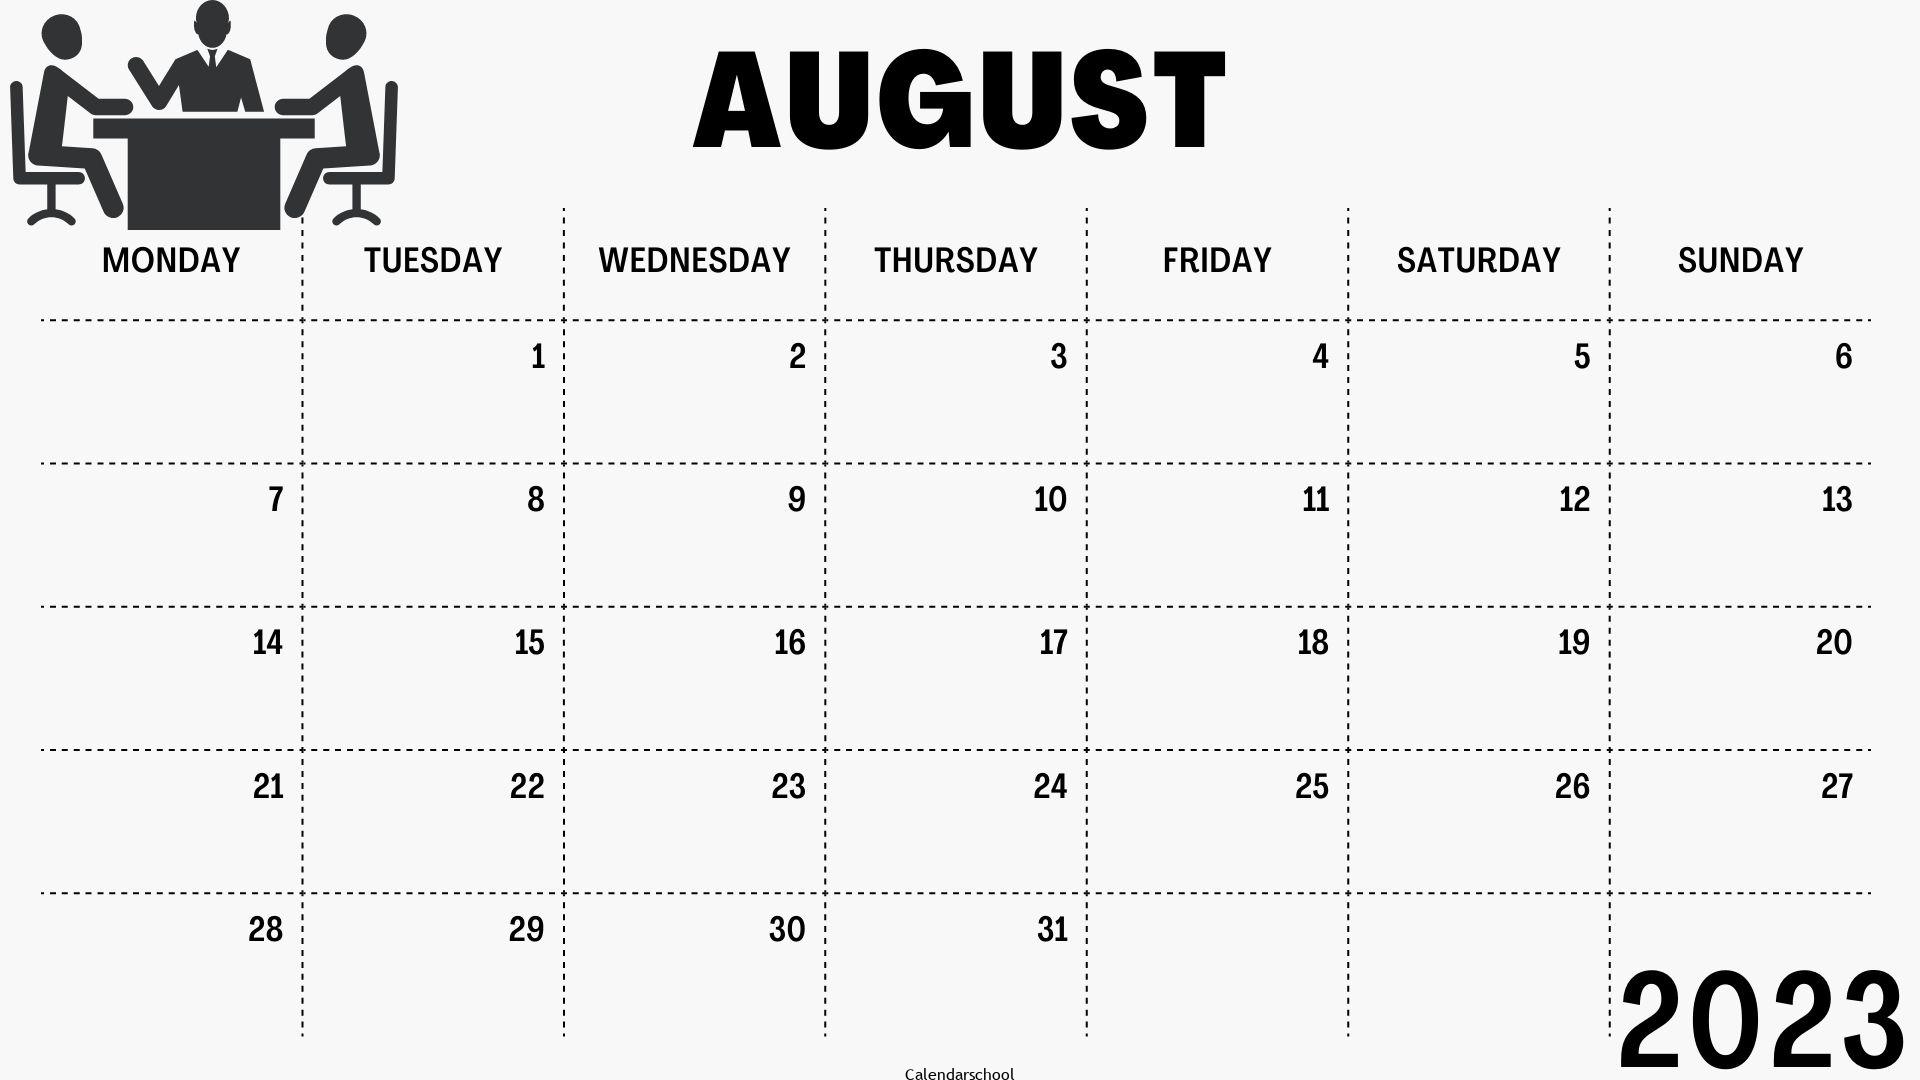 August 2023 Calendar With Festivals